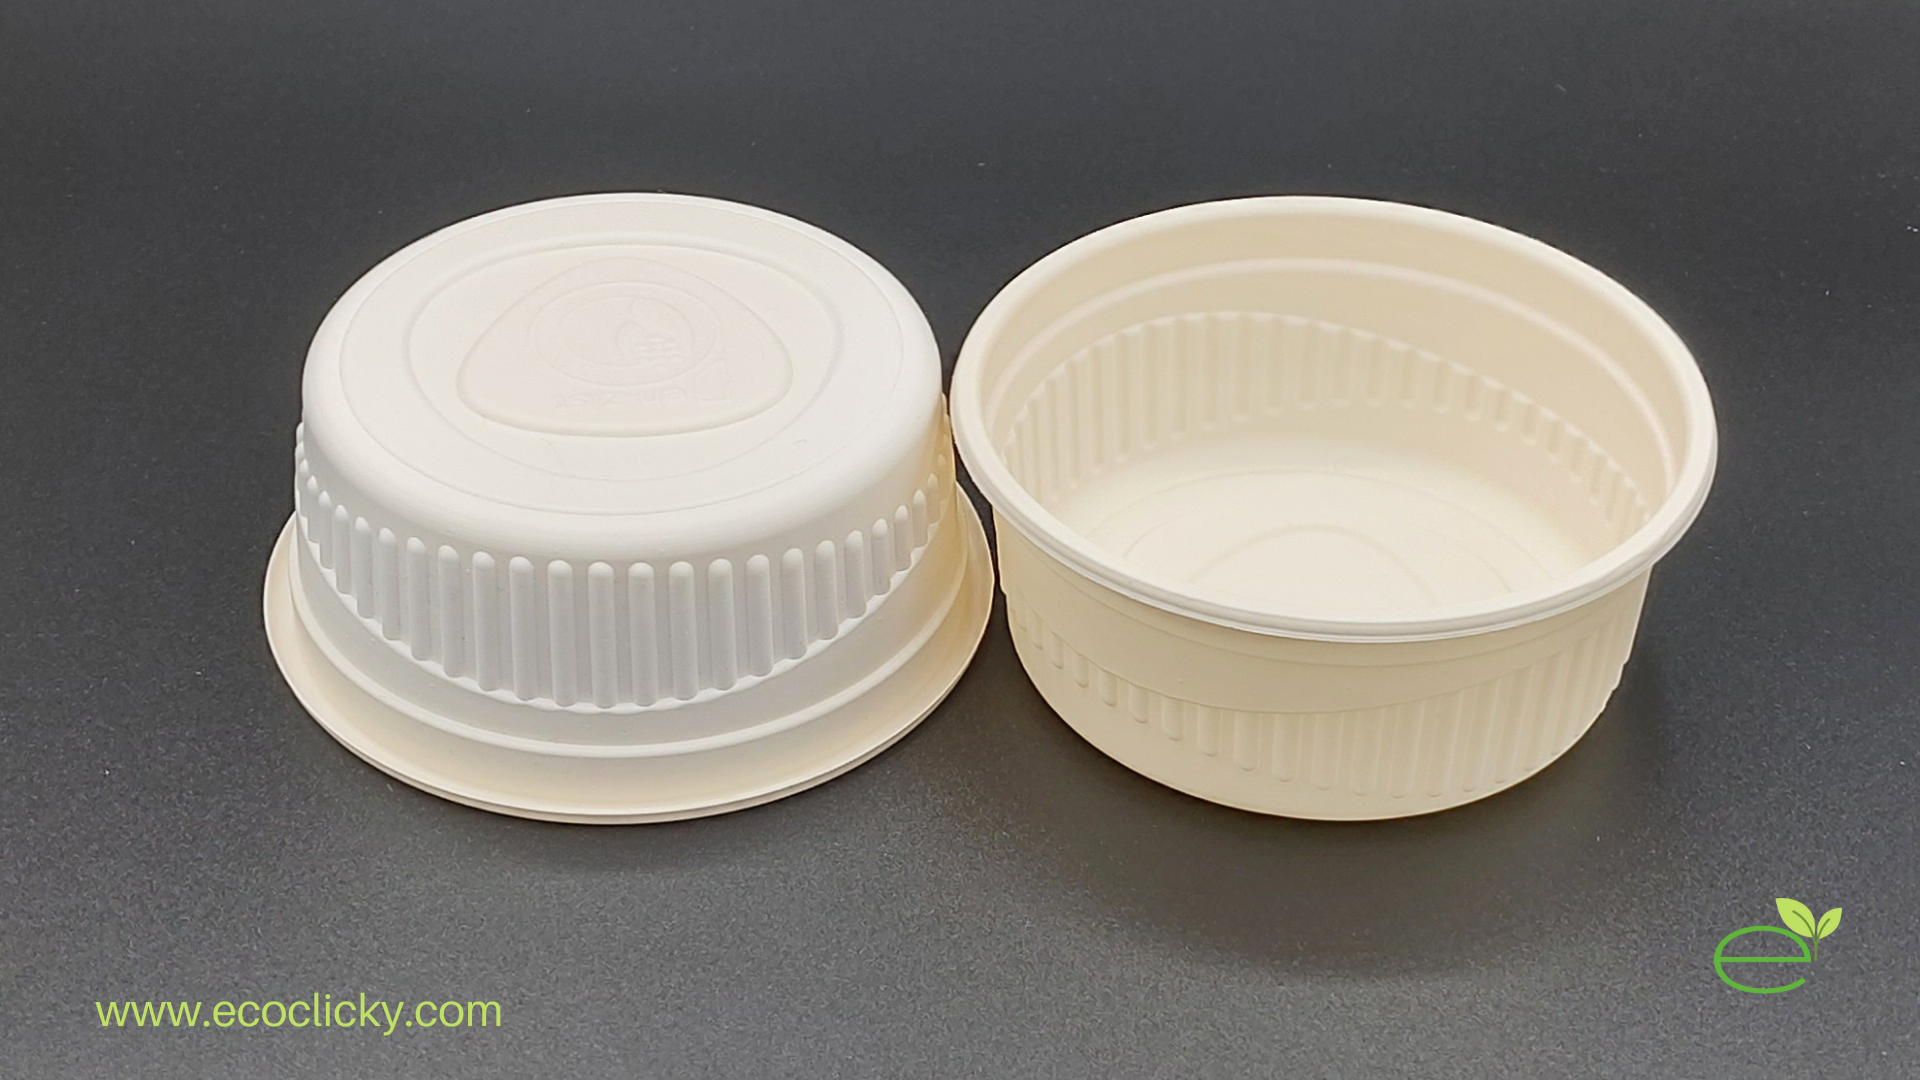 Biodegradable bowls